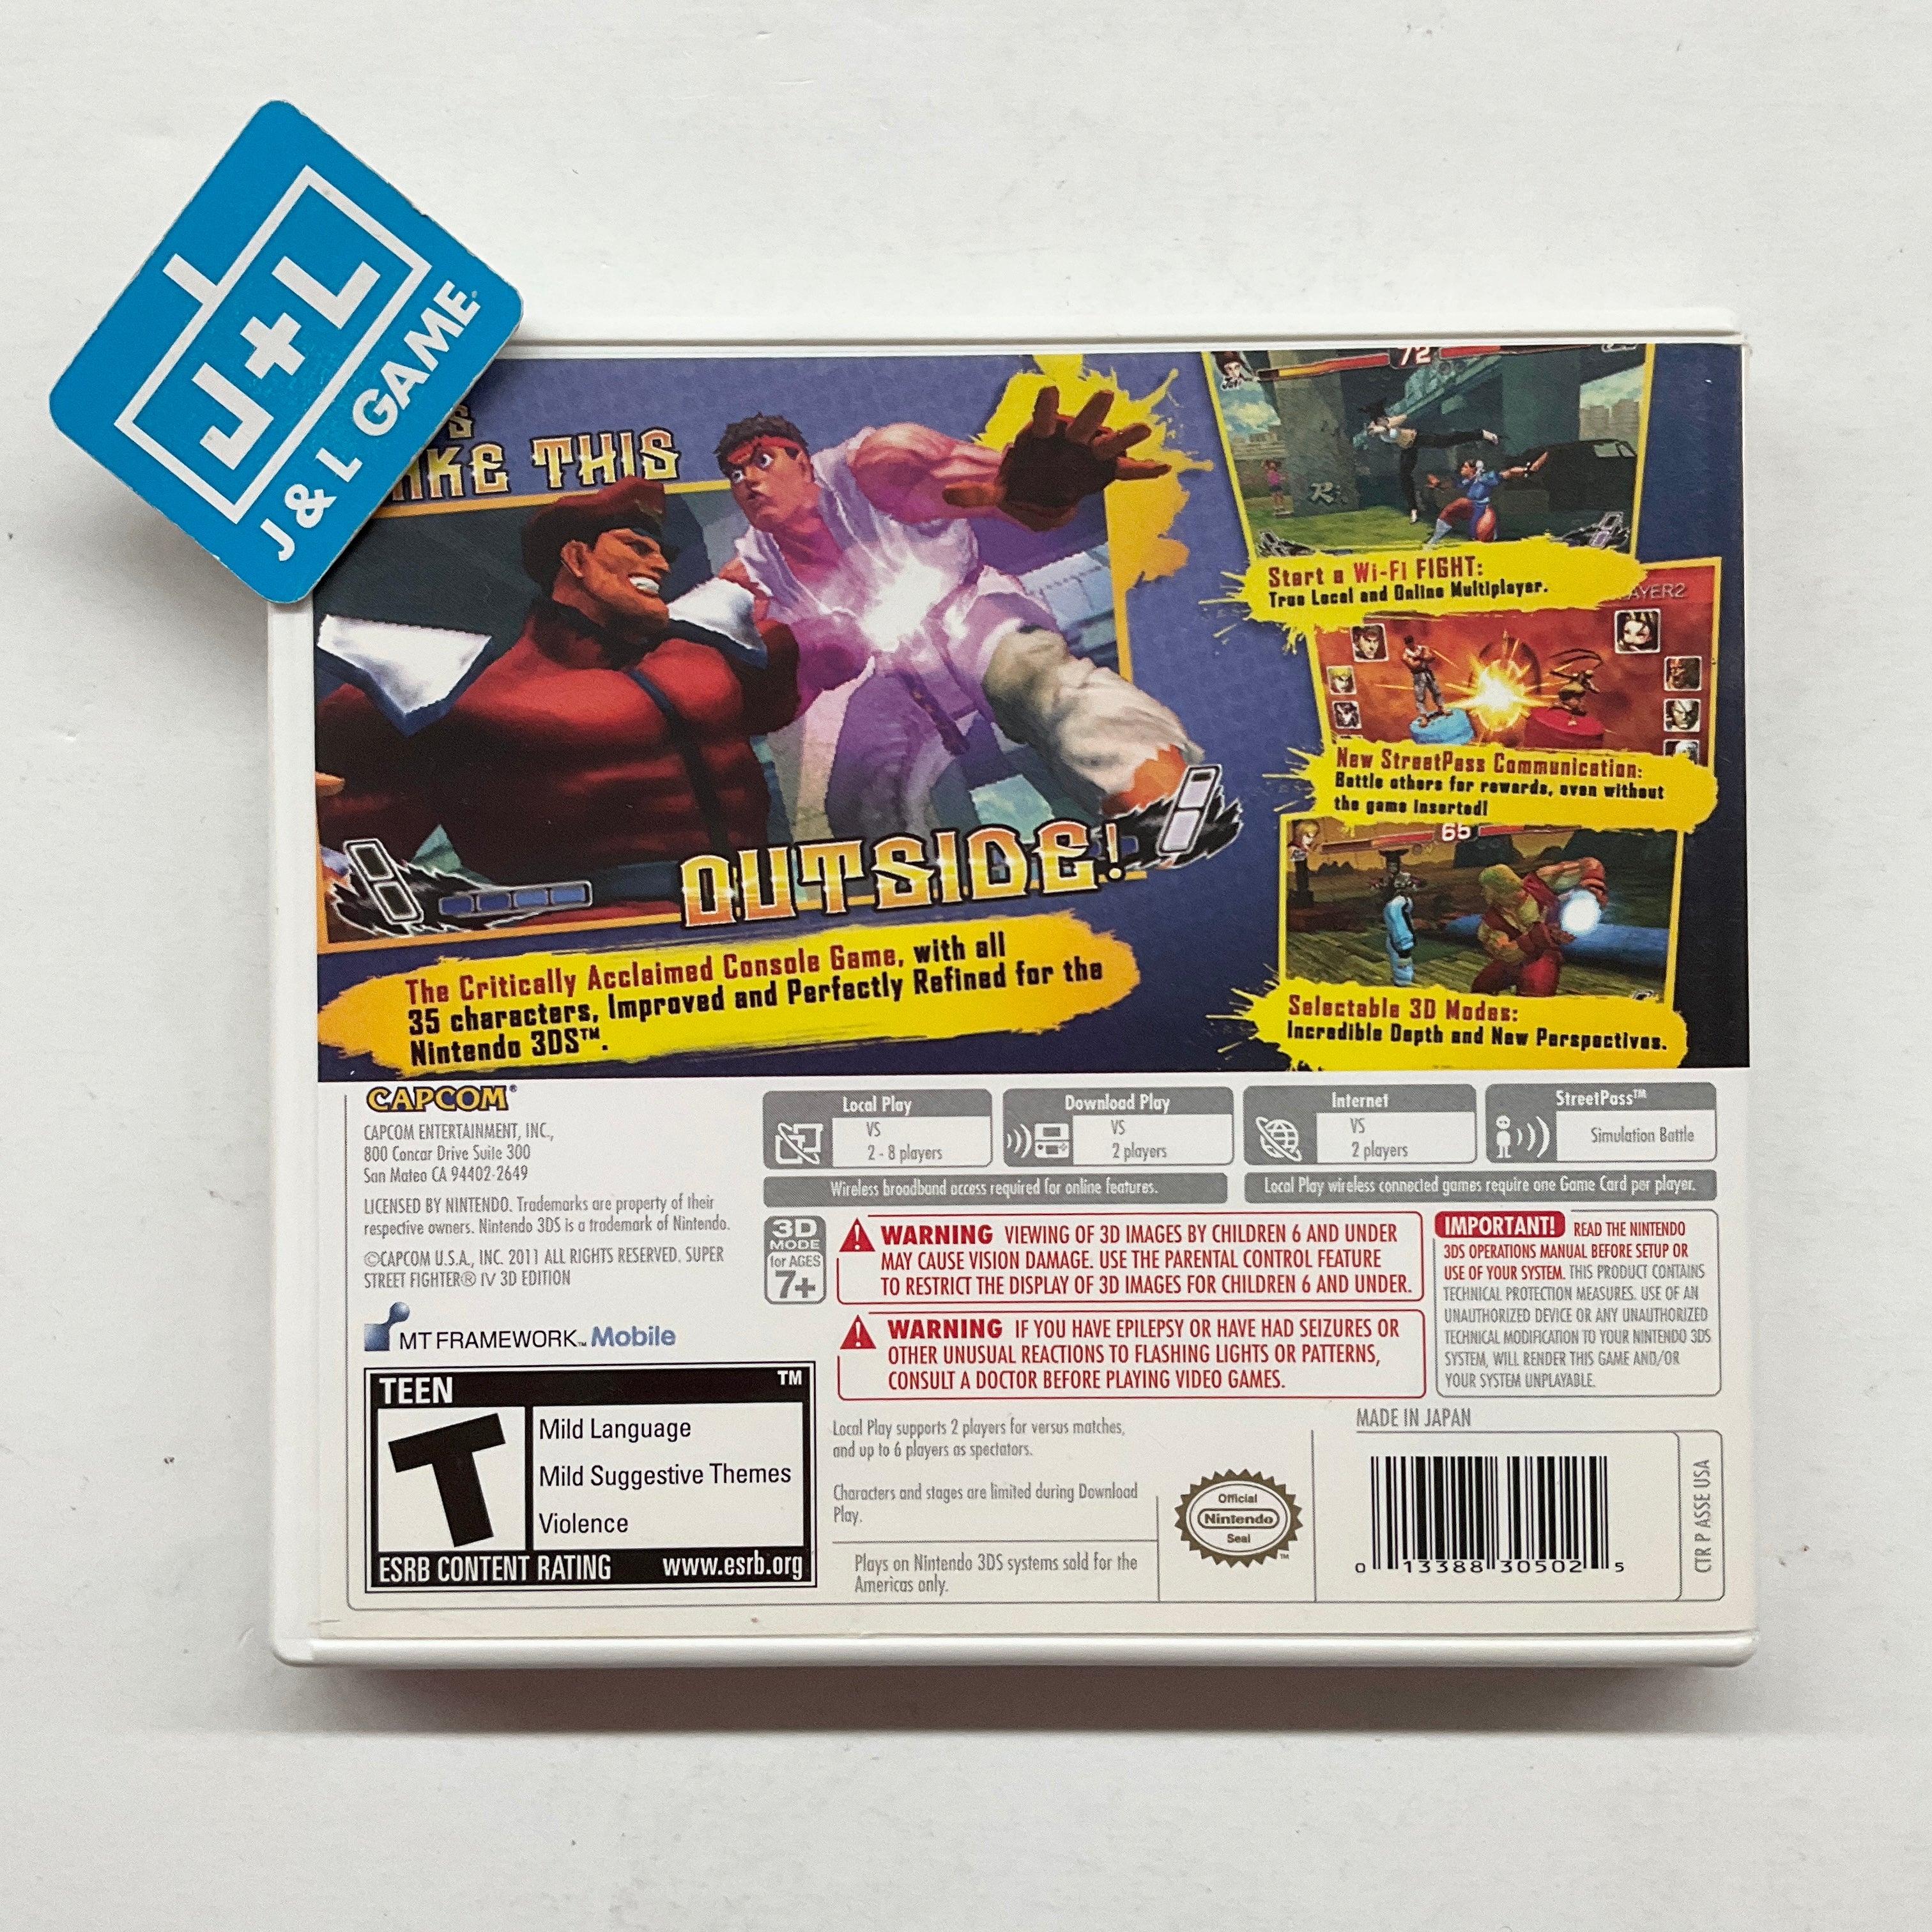 Super Street Fighter IV: 3D Edition - Nintendo 3DS [Pre-Owned] Video Games Capcom   